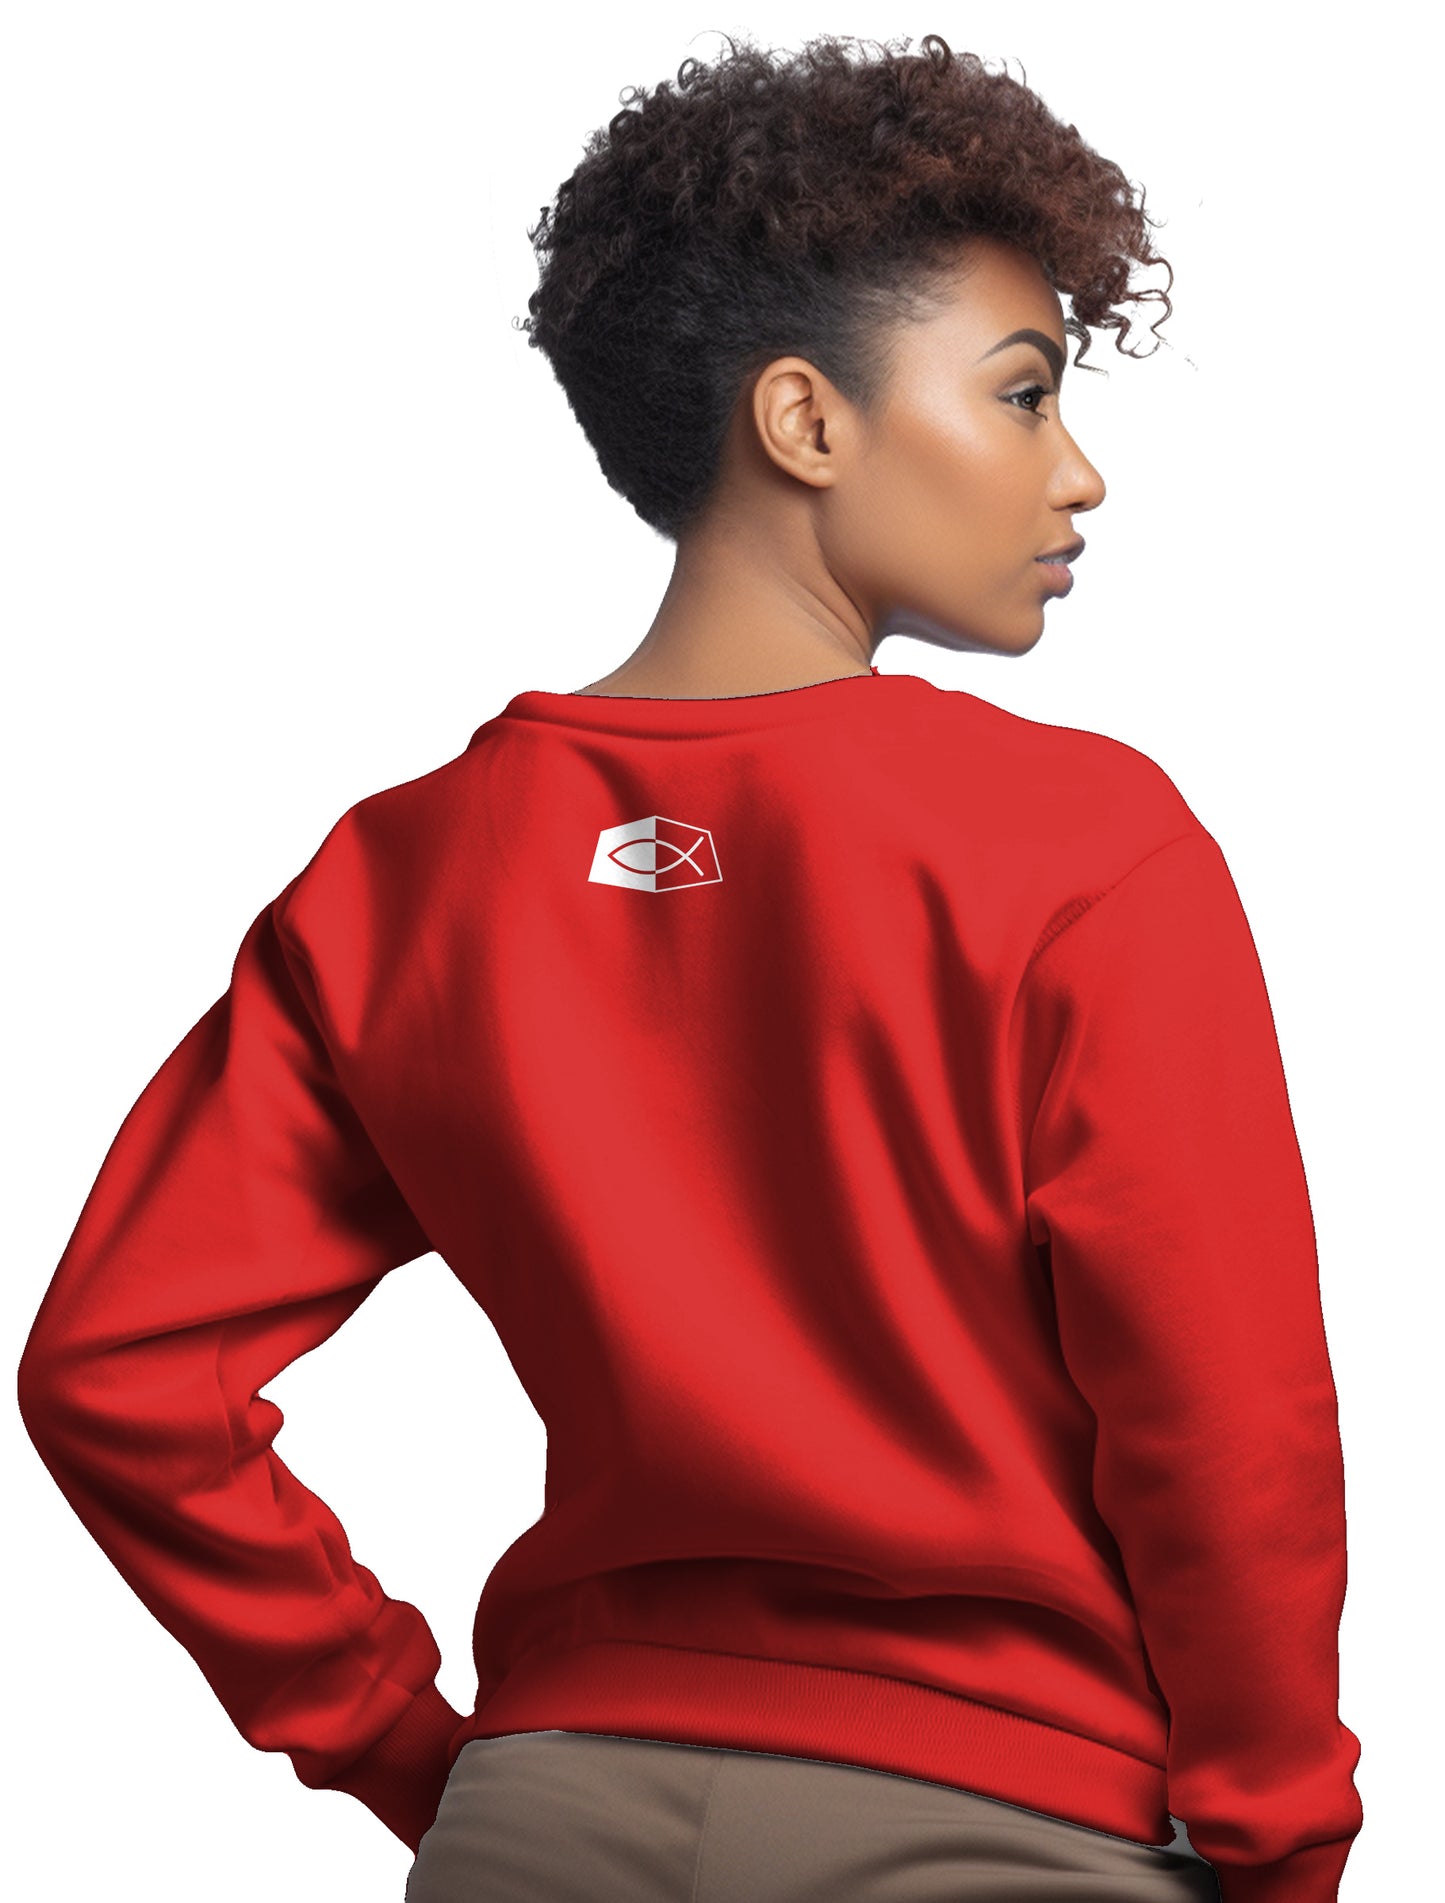 TRUTH - Women’s premium Unisex sweatshirt